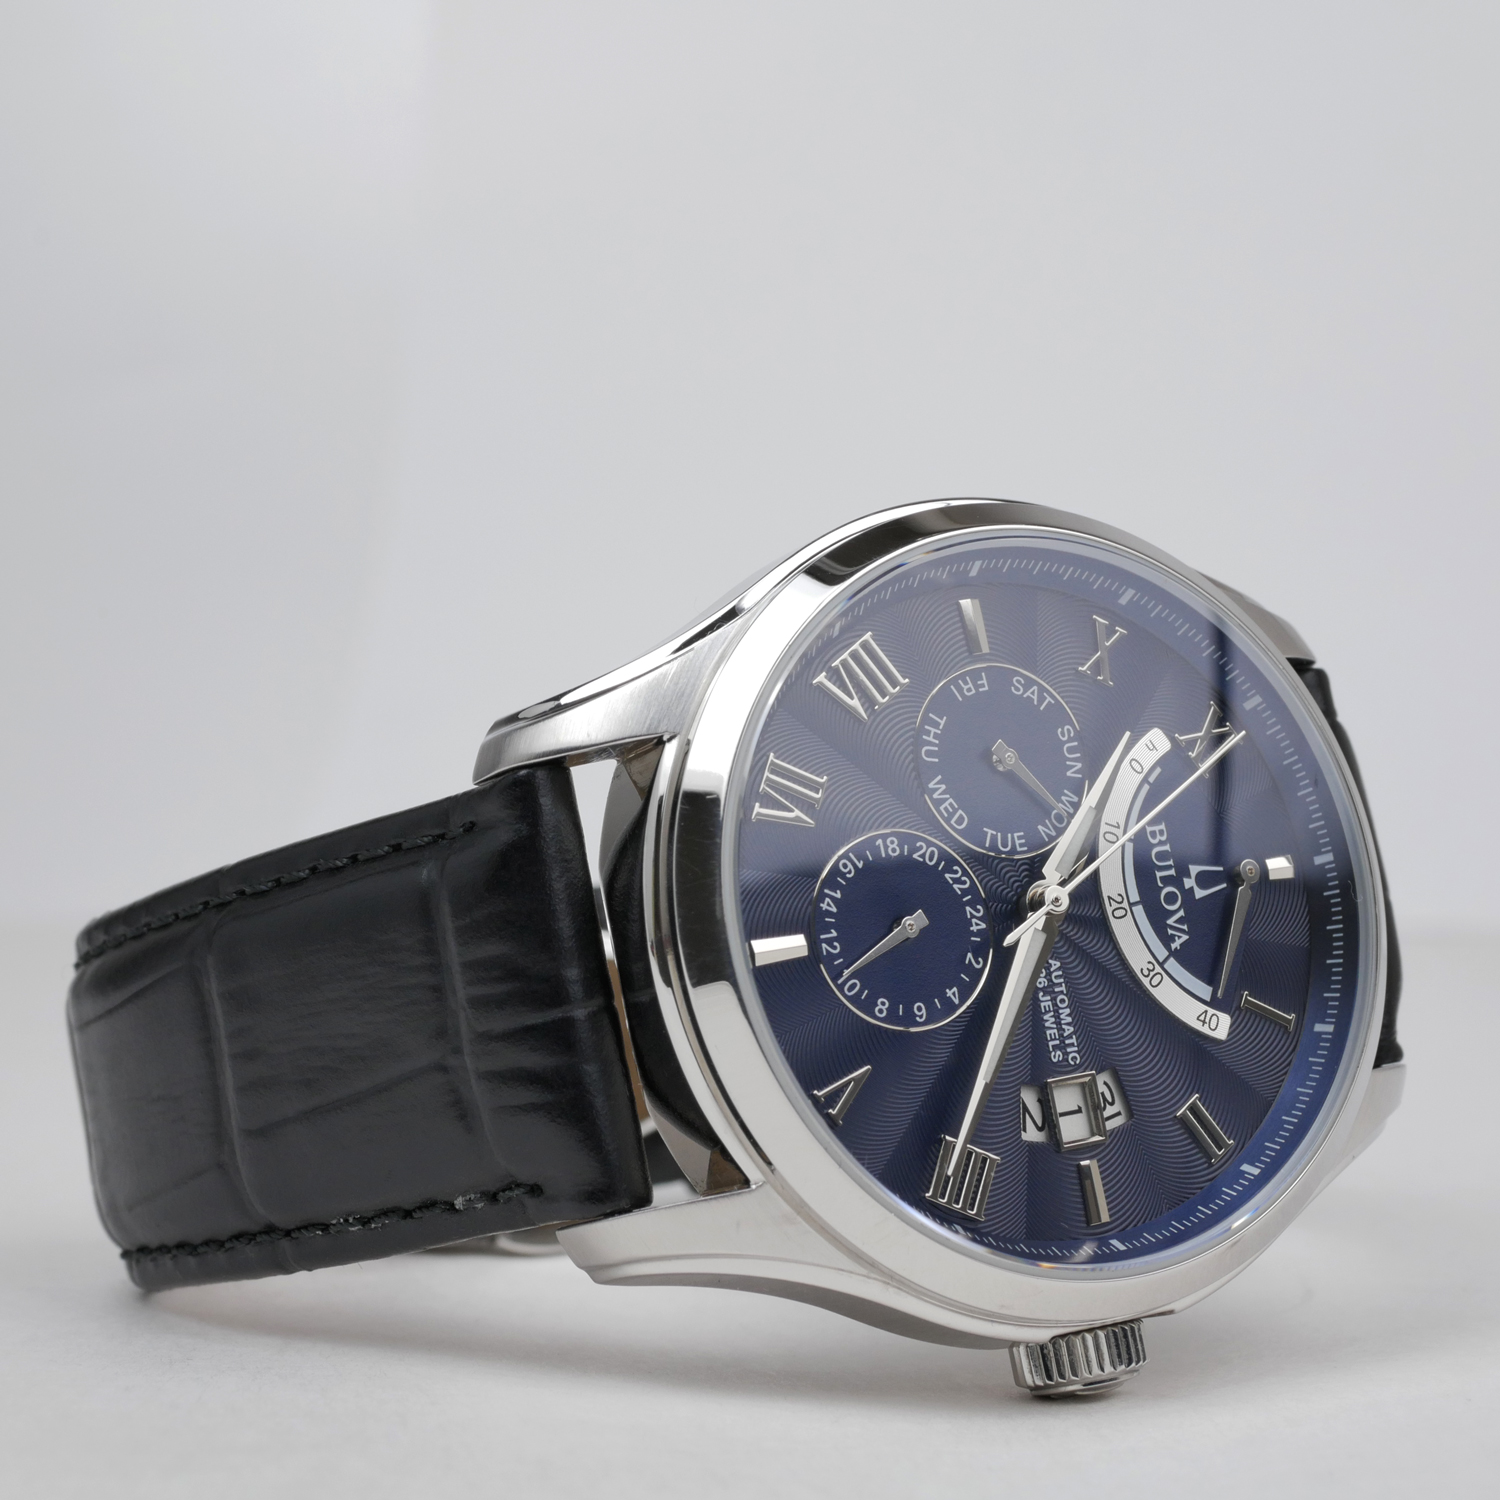 Bulova Classic Wilton Automatic Men's Watch Black Leather Strap / Blue Dial 96C142